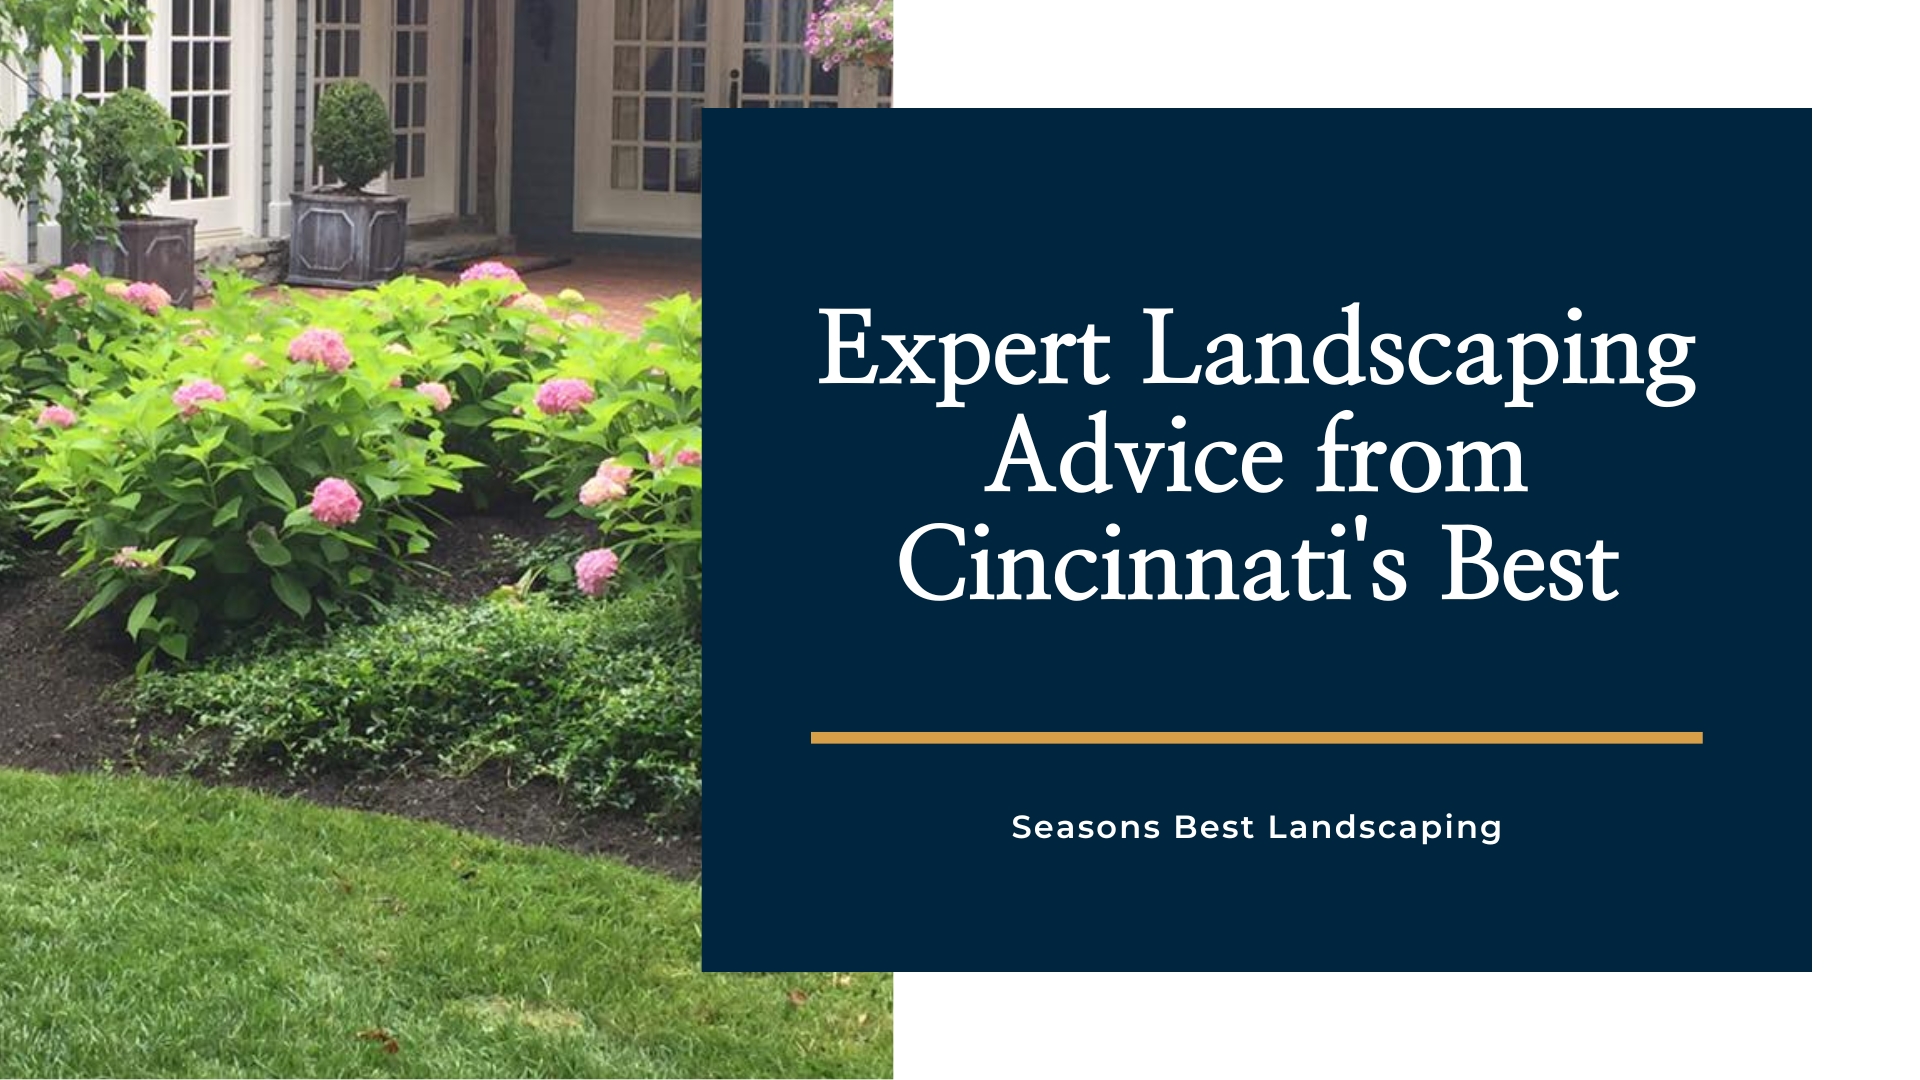 Cincinnati Lawn Care Blog Image - Seasons Best Landscaping